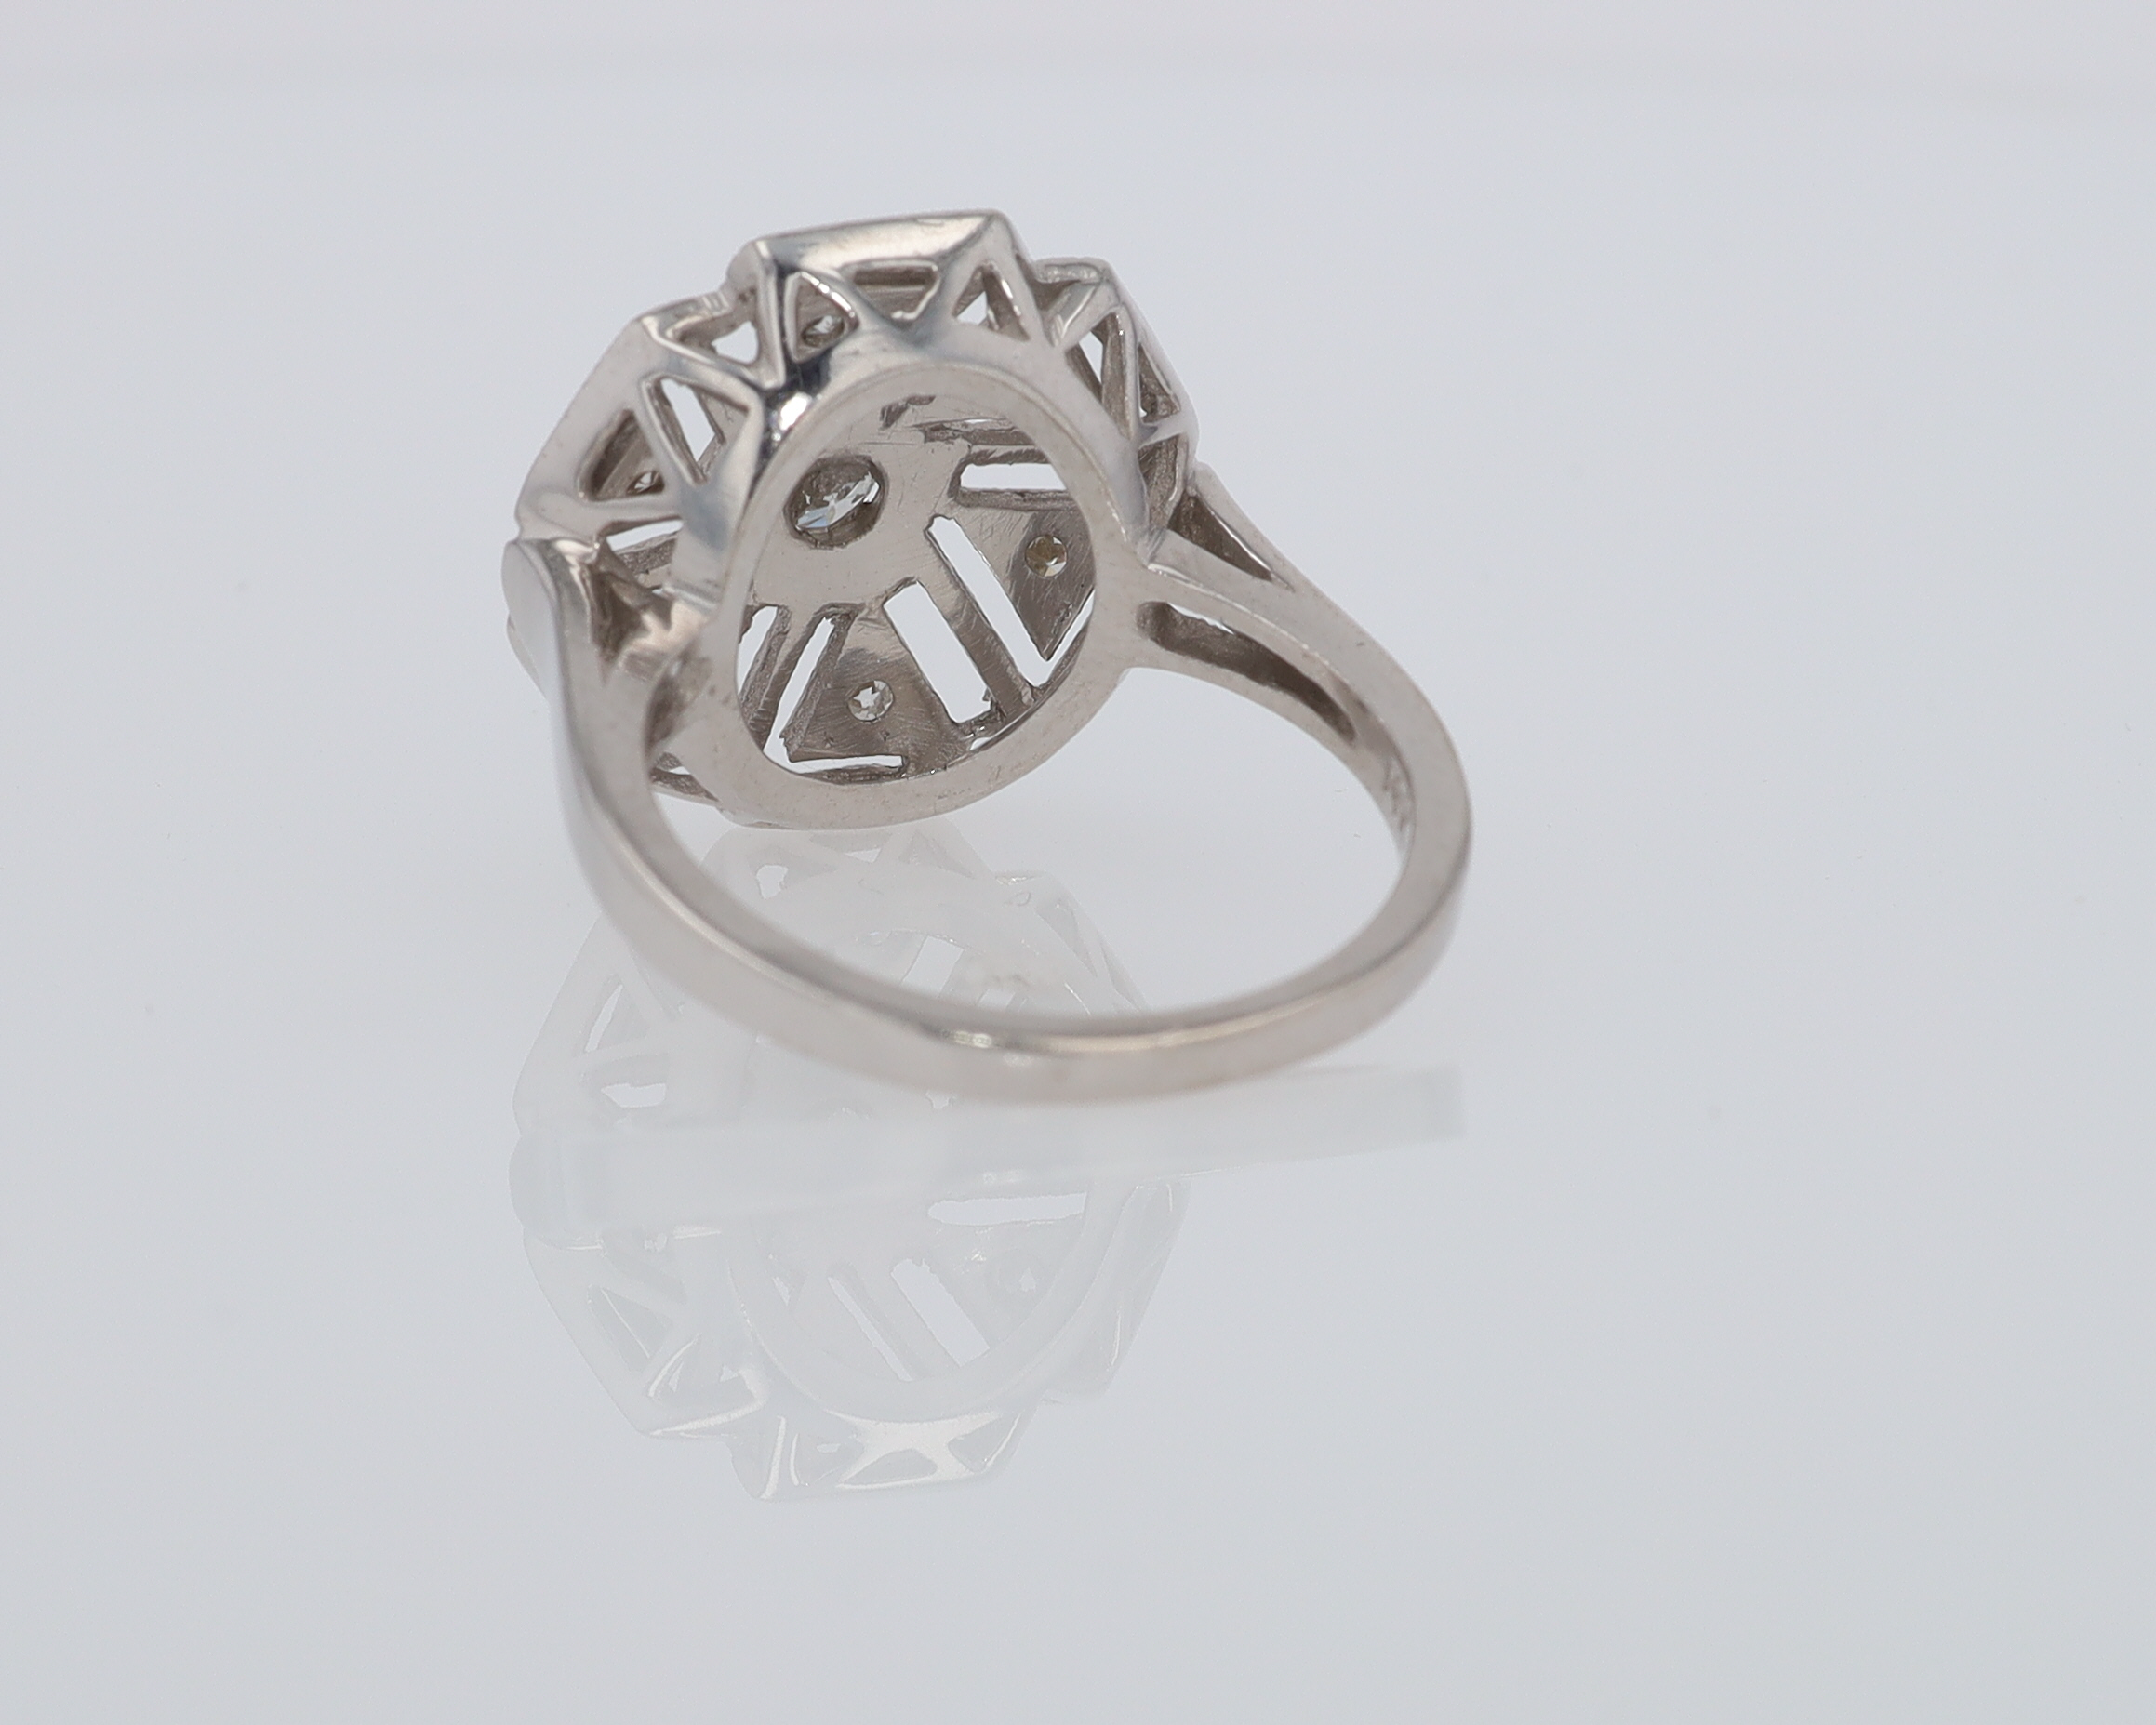 1920's Art Deco Diamond Cluster Engagement Ring